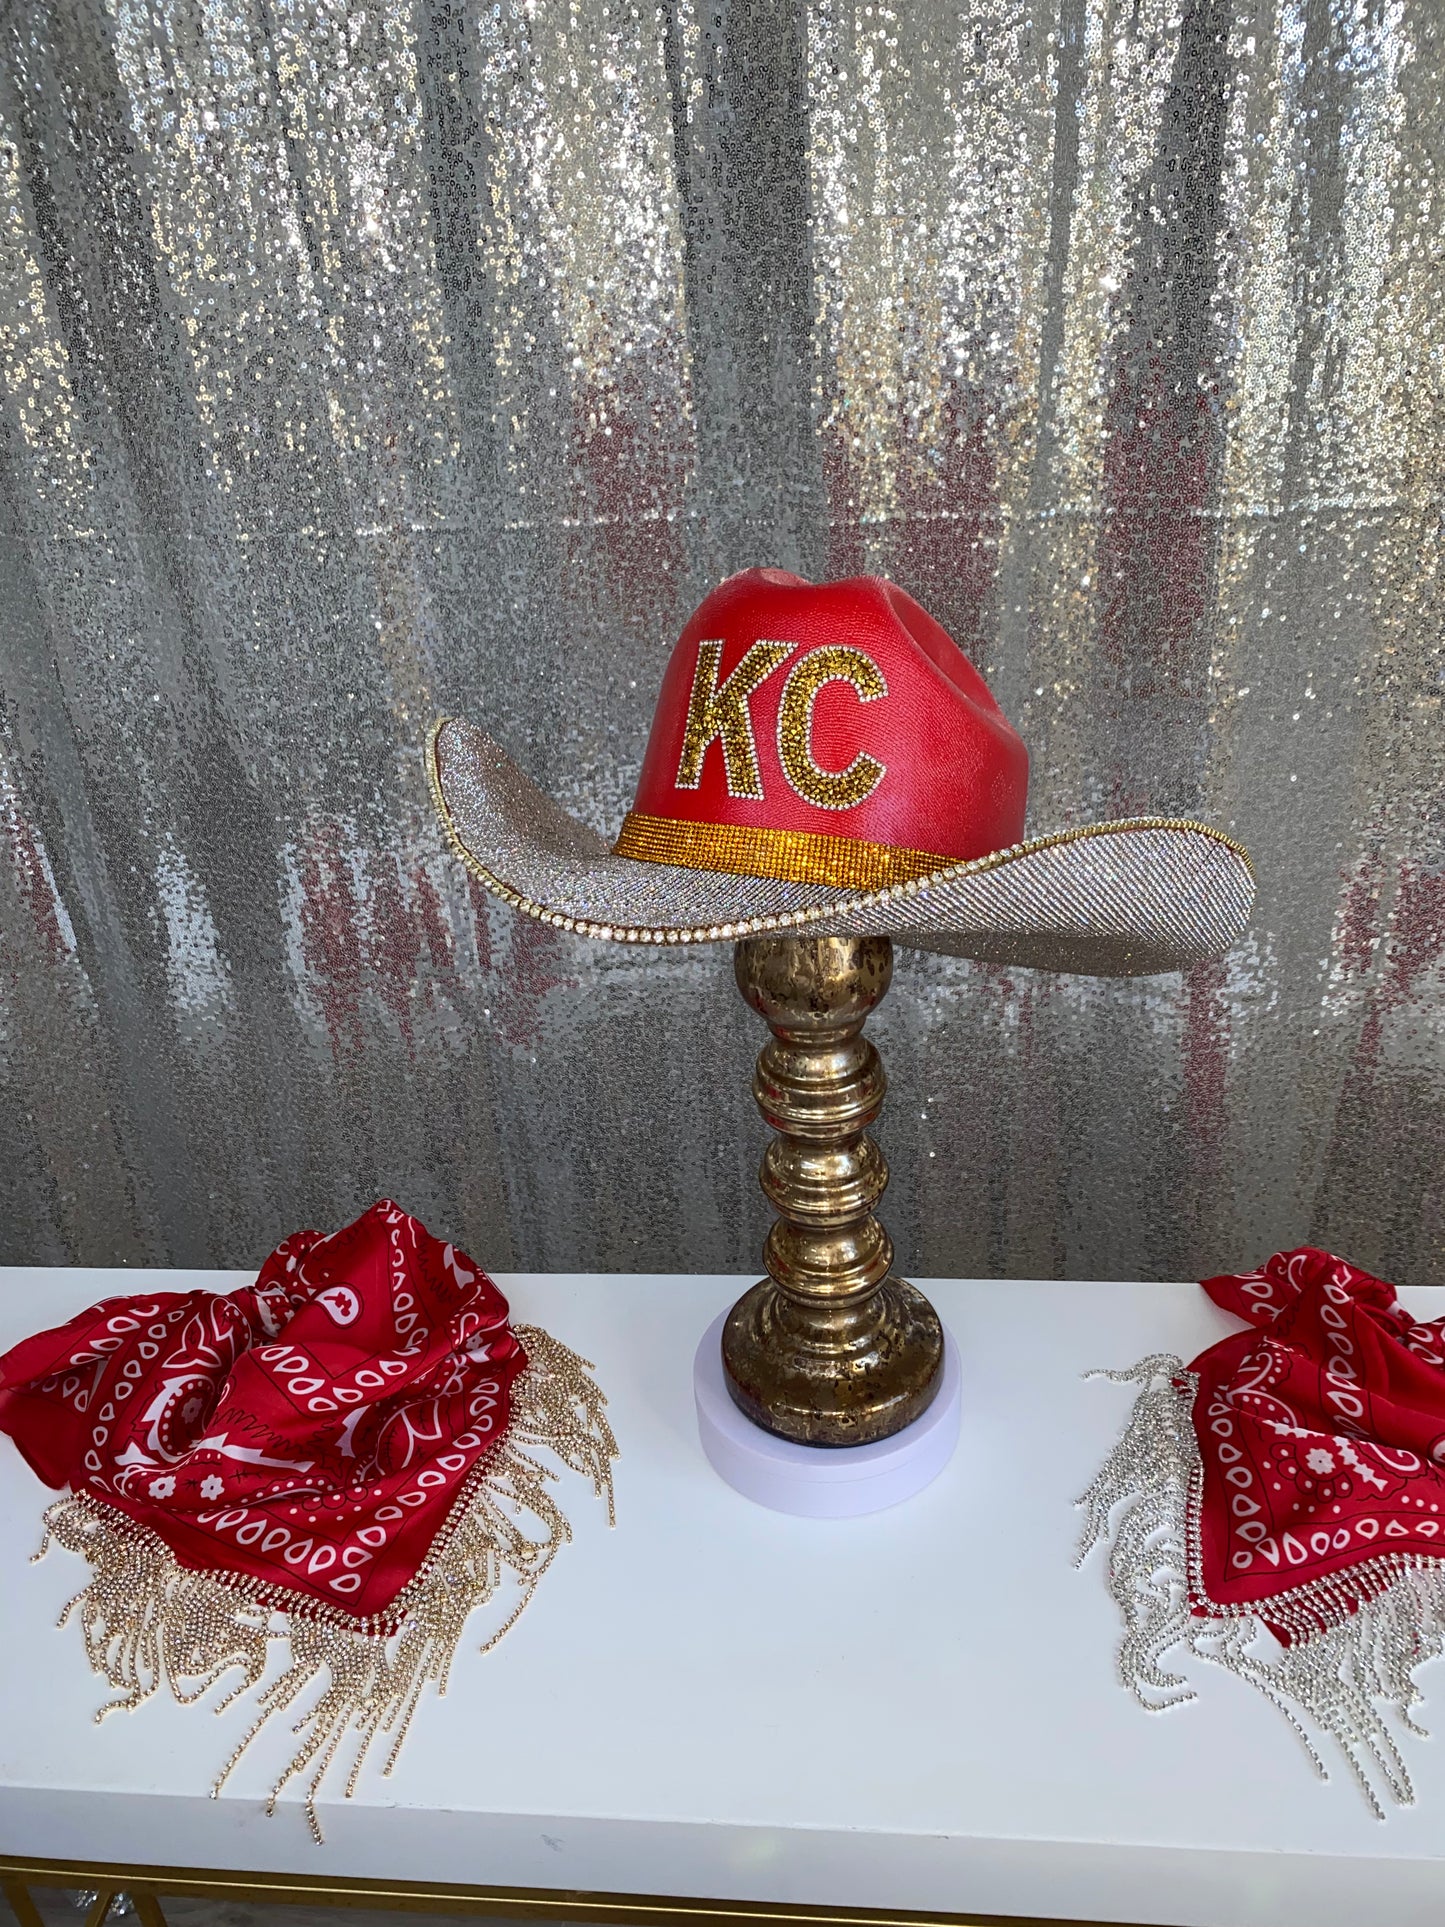 Kansas City Chiefs Hat